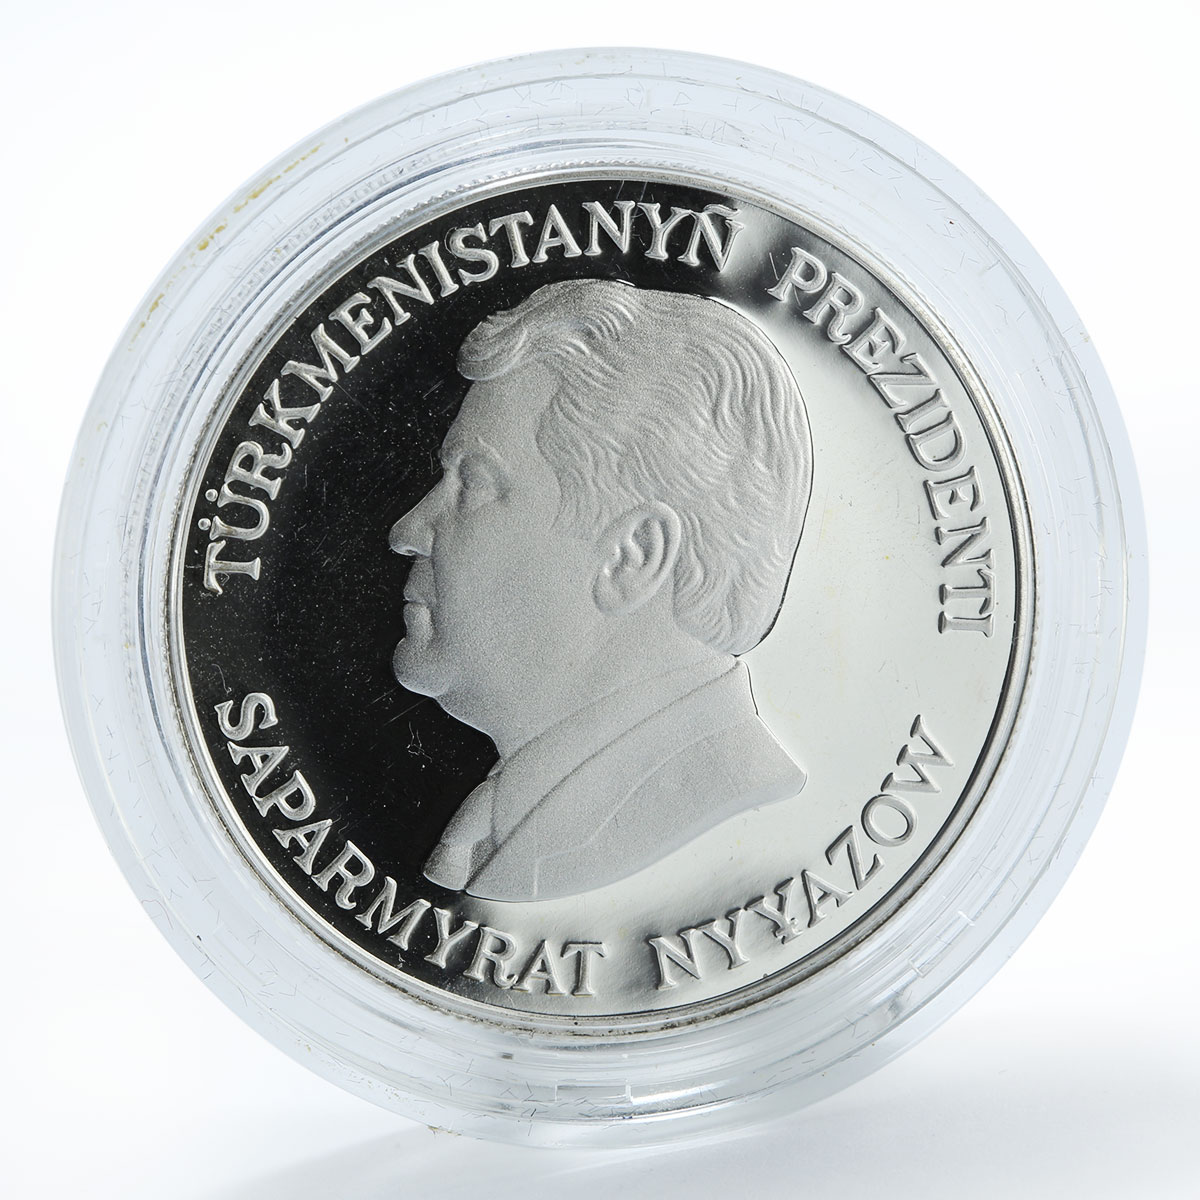 Turkmenistan 500 manat Red Book Tetraogallus caspius fauna silver coin 1996